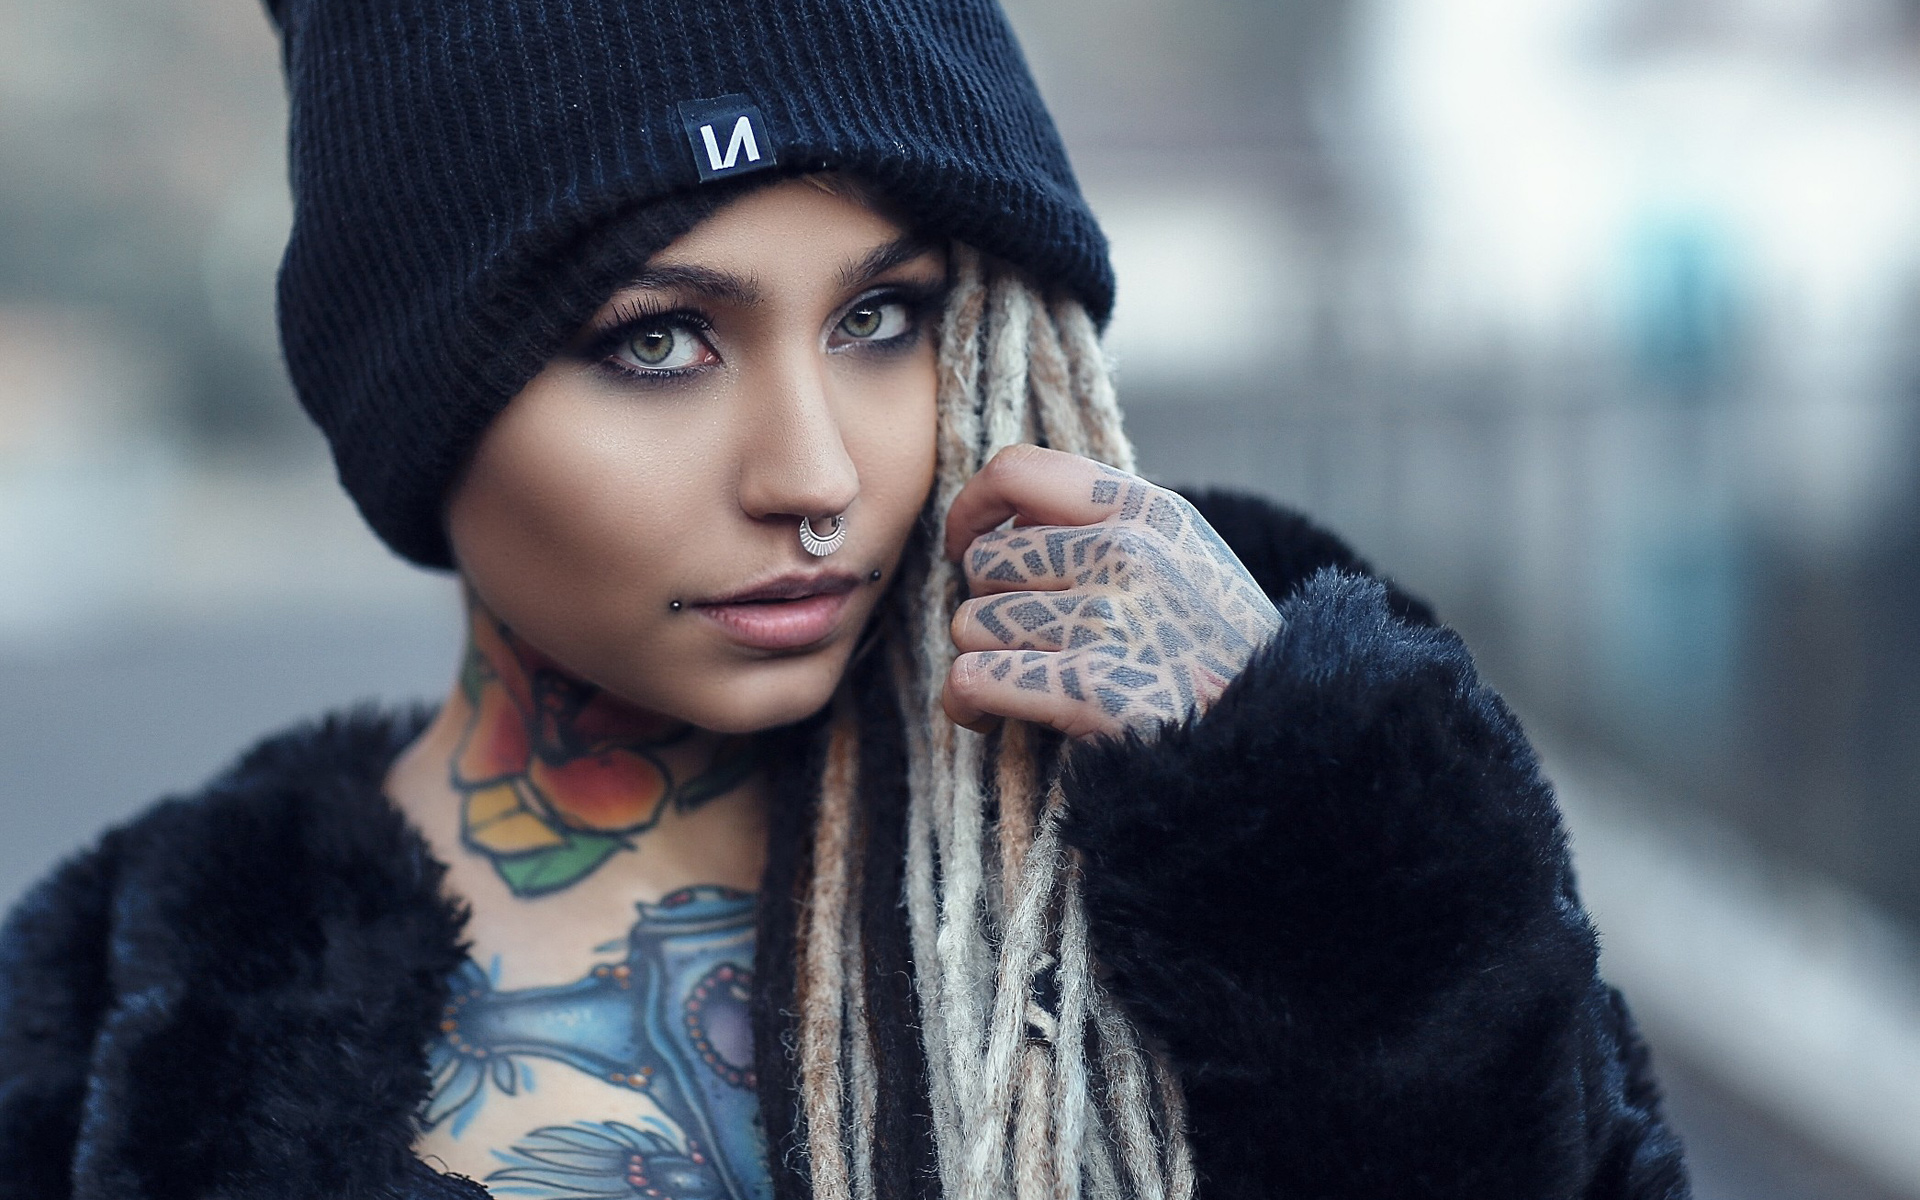 tattoo girl wallpaper,beanie,face,knit cap,beauty,street fashion